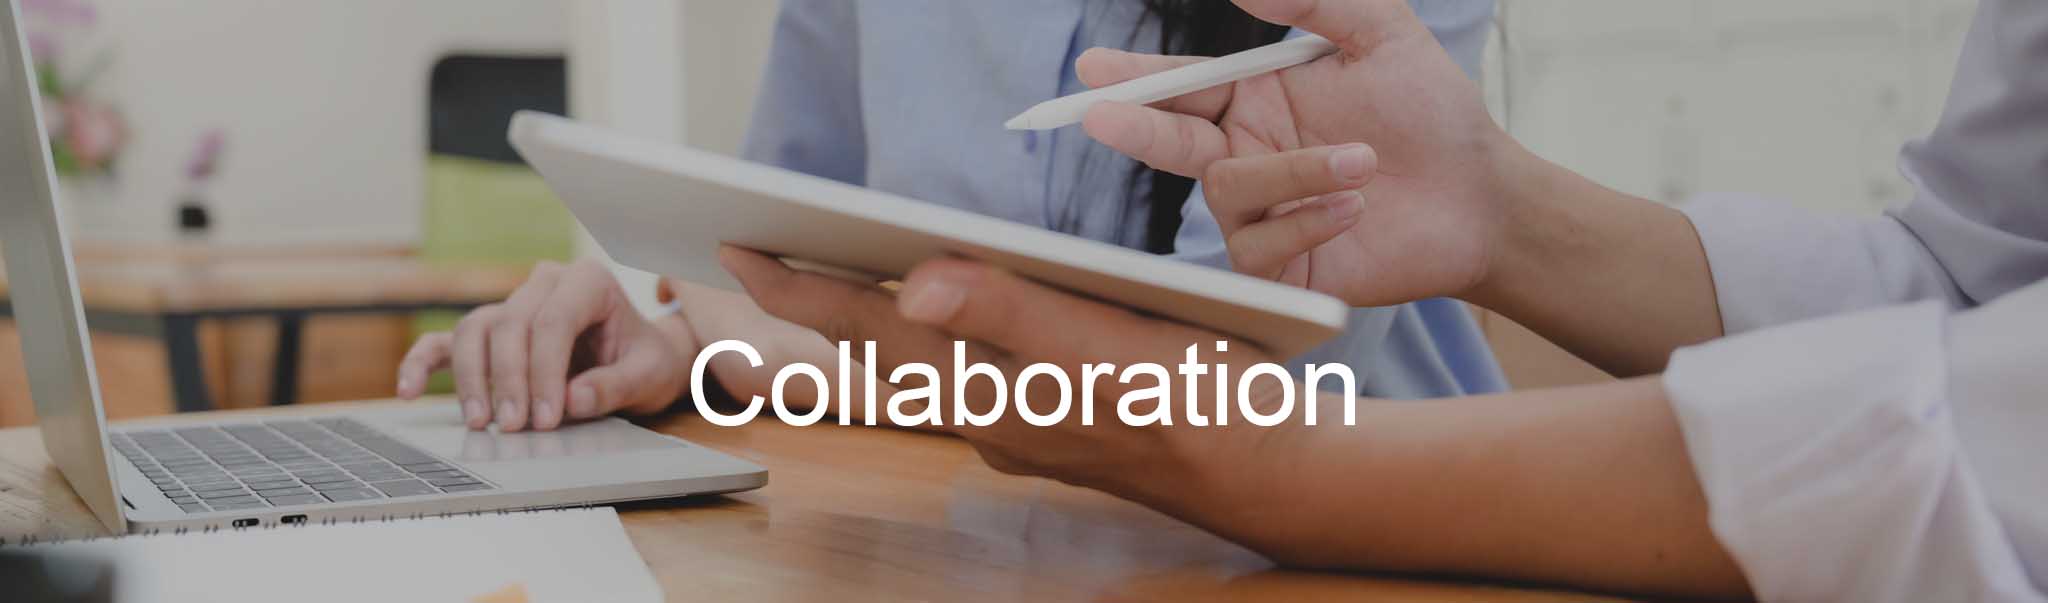 collaboration network